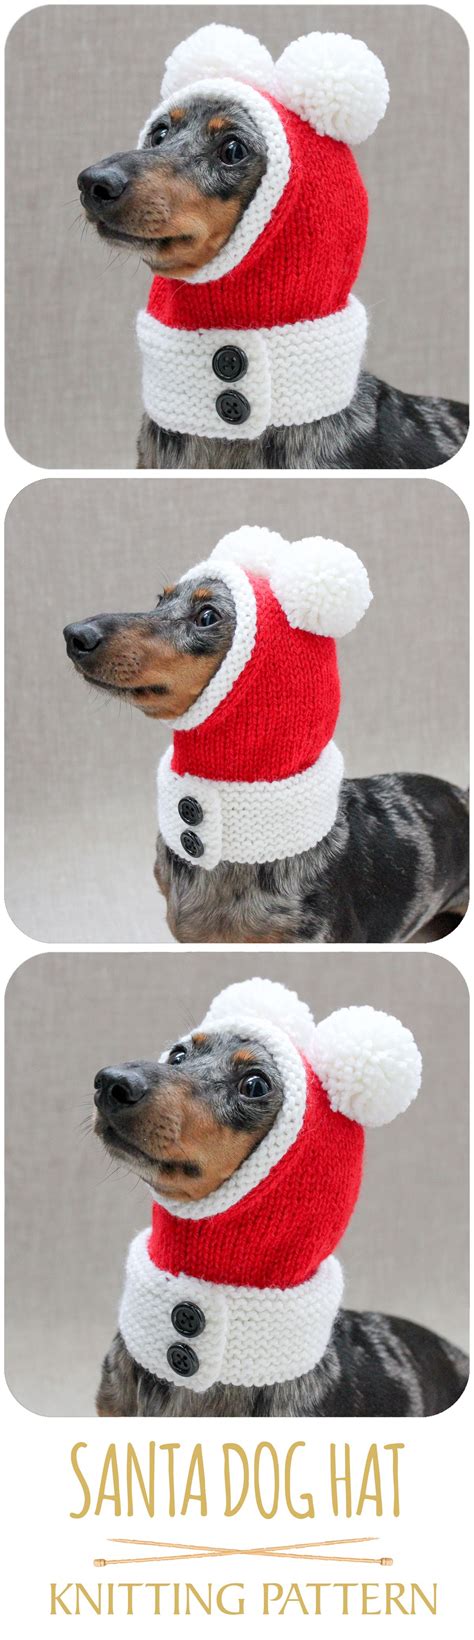 Knitted Santa Dog Hat In 2020 Dog Hat Santa Dog Hats